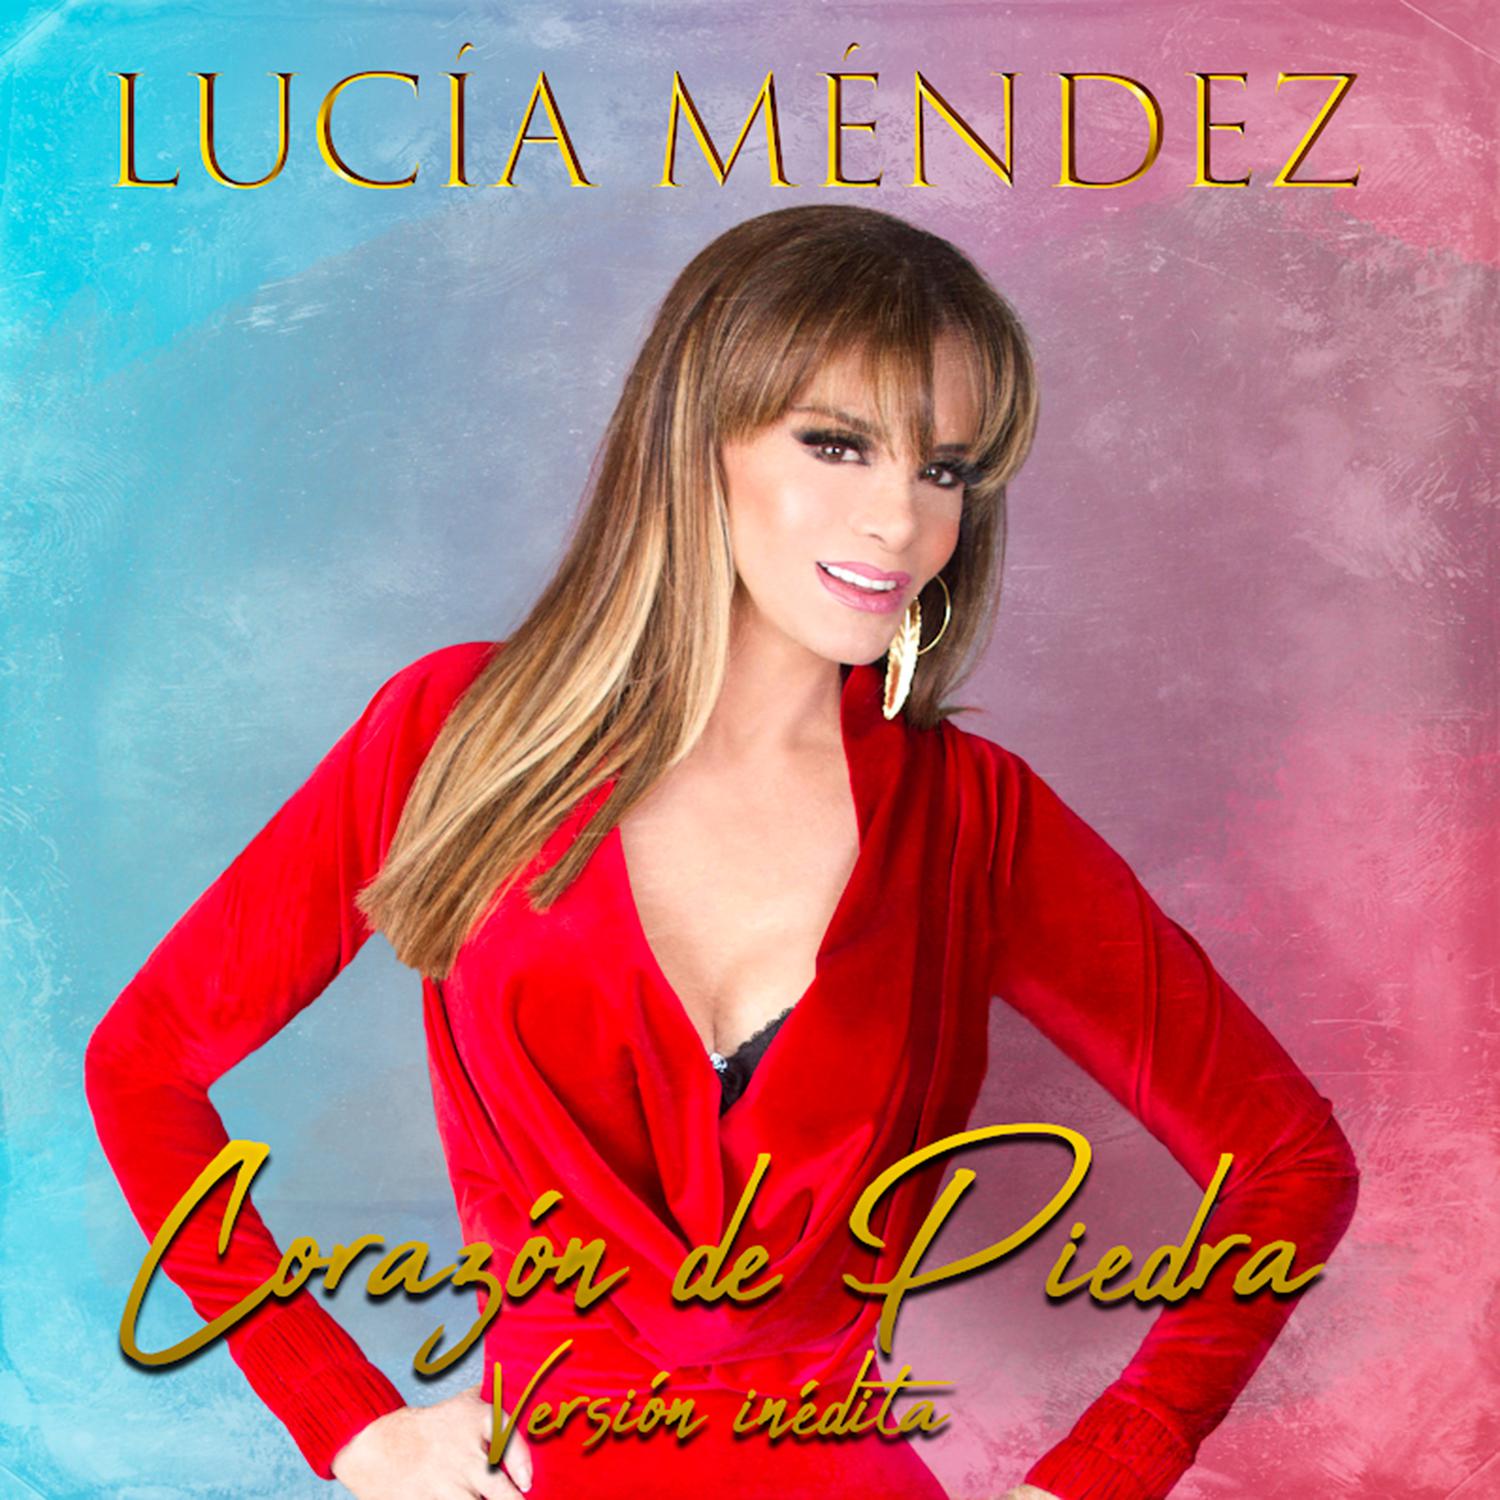 Lucia Mendez - Corazón de Piedra (Versión Inédita)